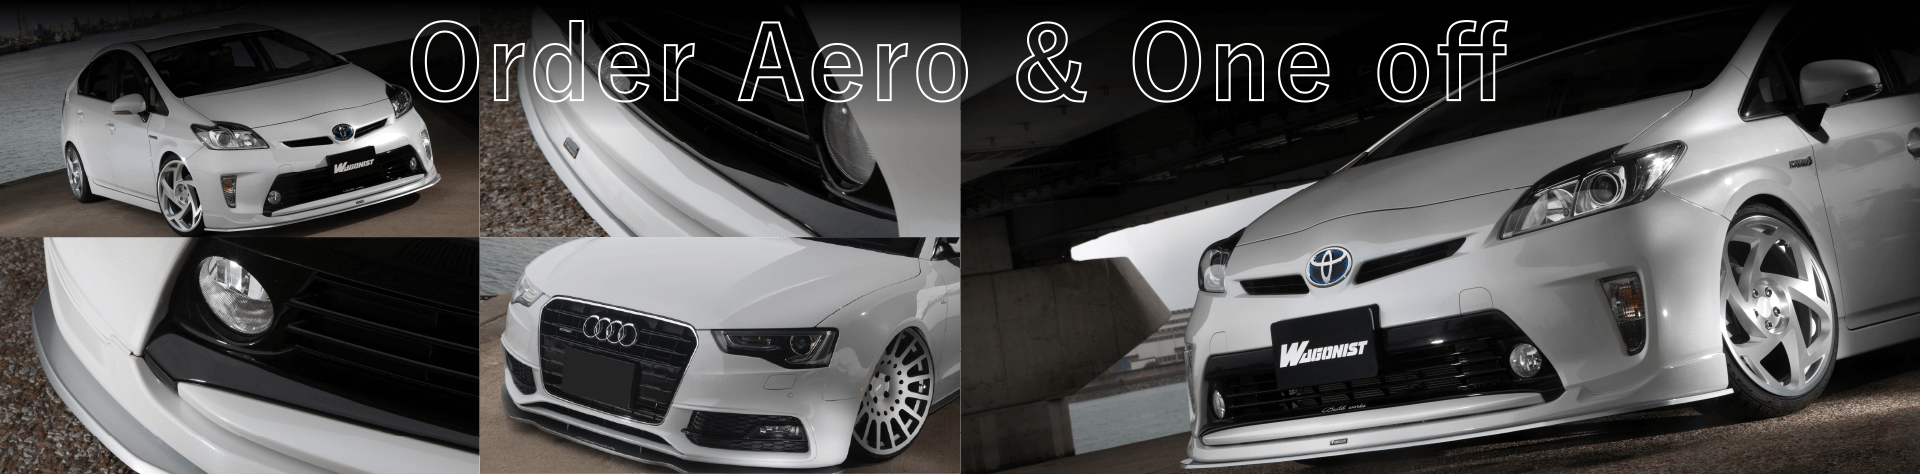 Order Aero & One off